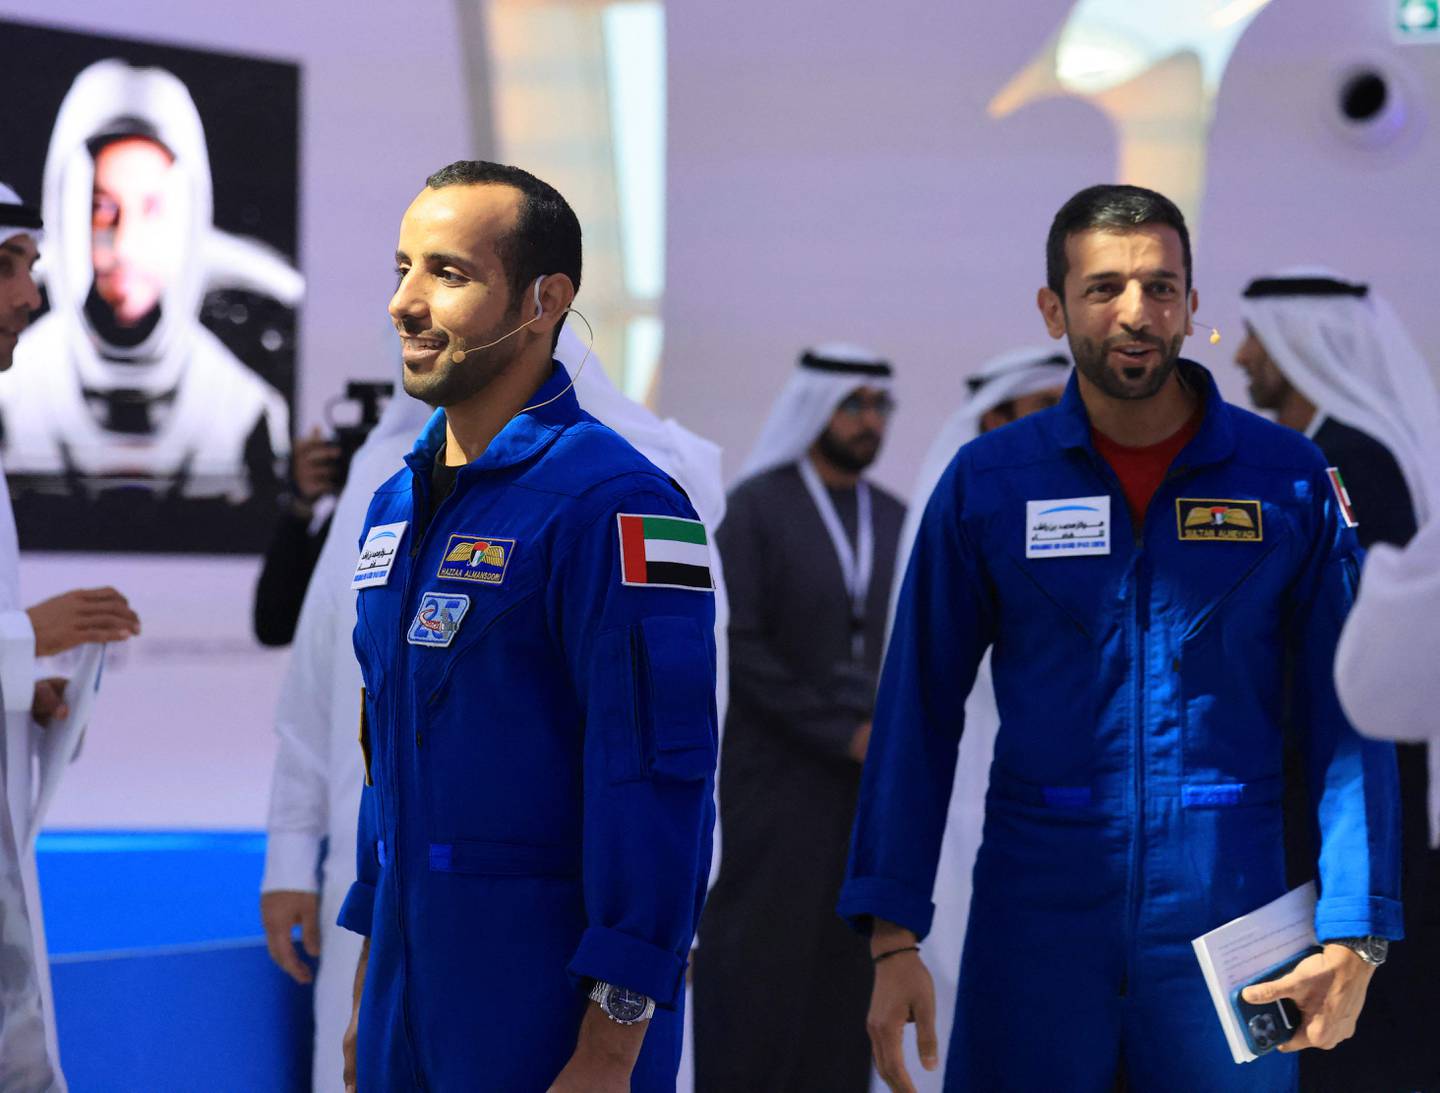 UAE astronauts Sultan Al Neyadi, right, and Hazza Al Mansoori arrive at the Museum of the Future press conference. AFP